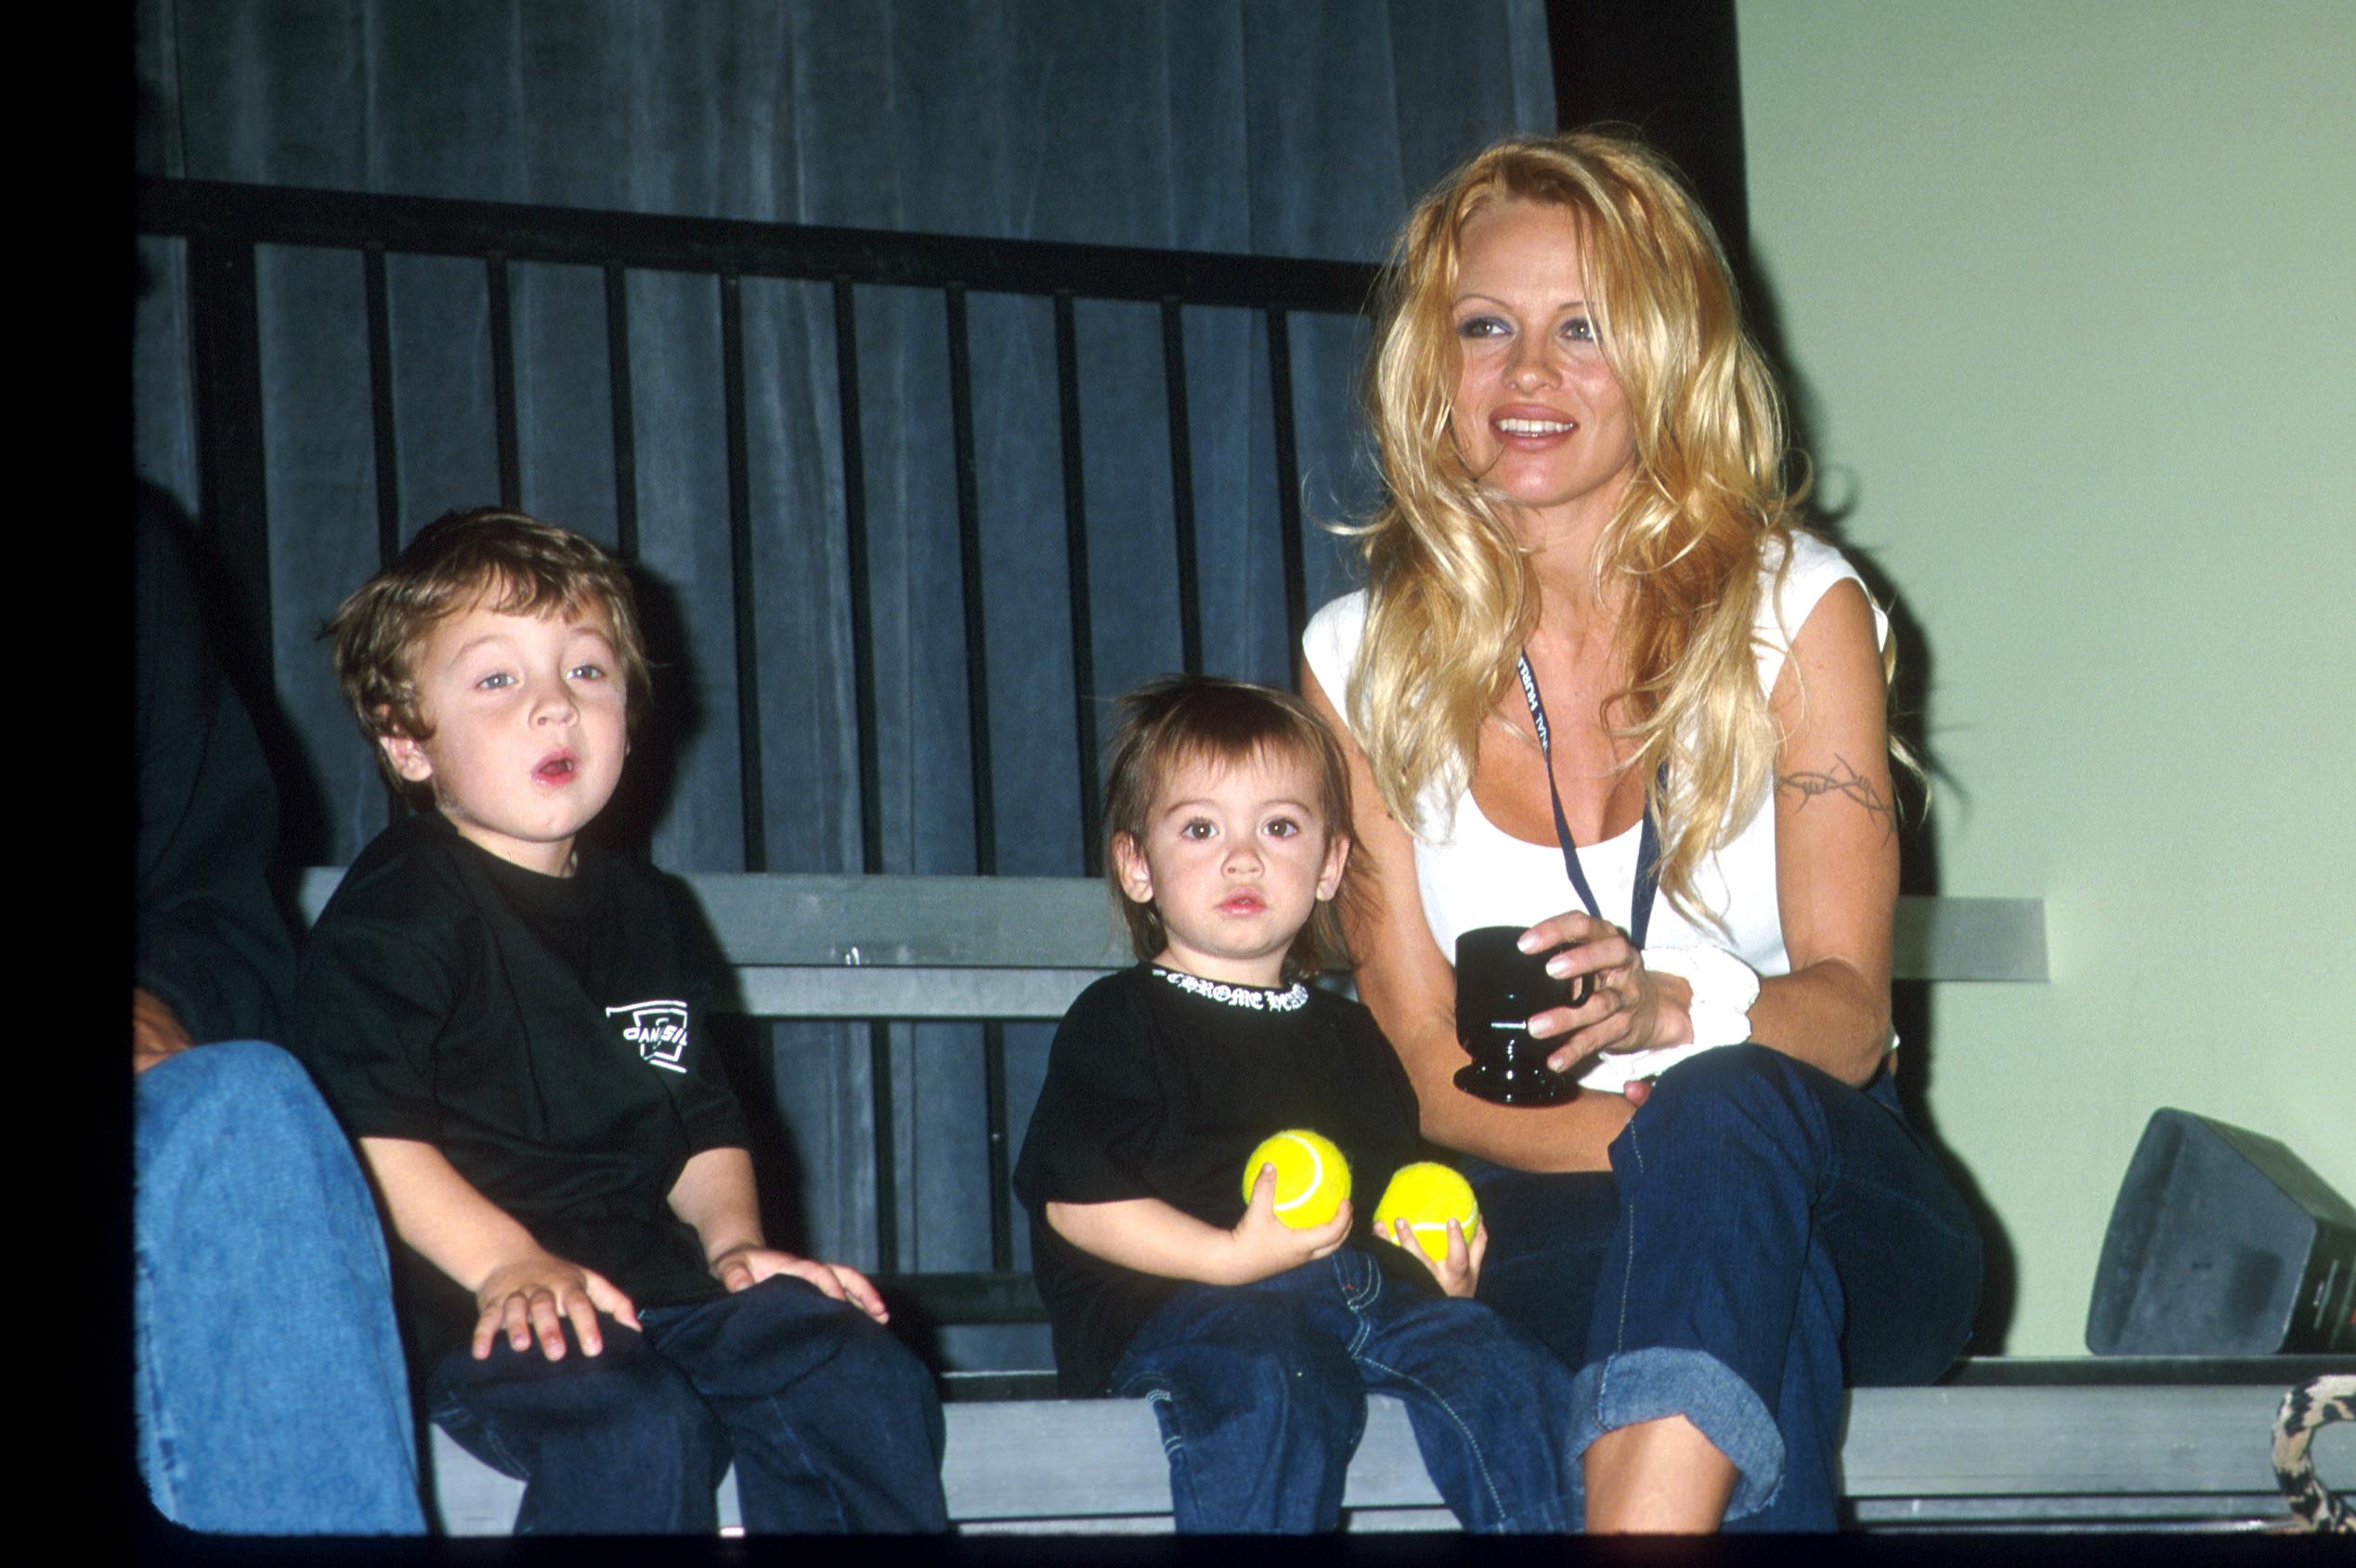 Brandon Lee, Pamela Anderson, and Dylan Lee in 2000